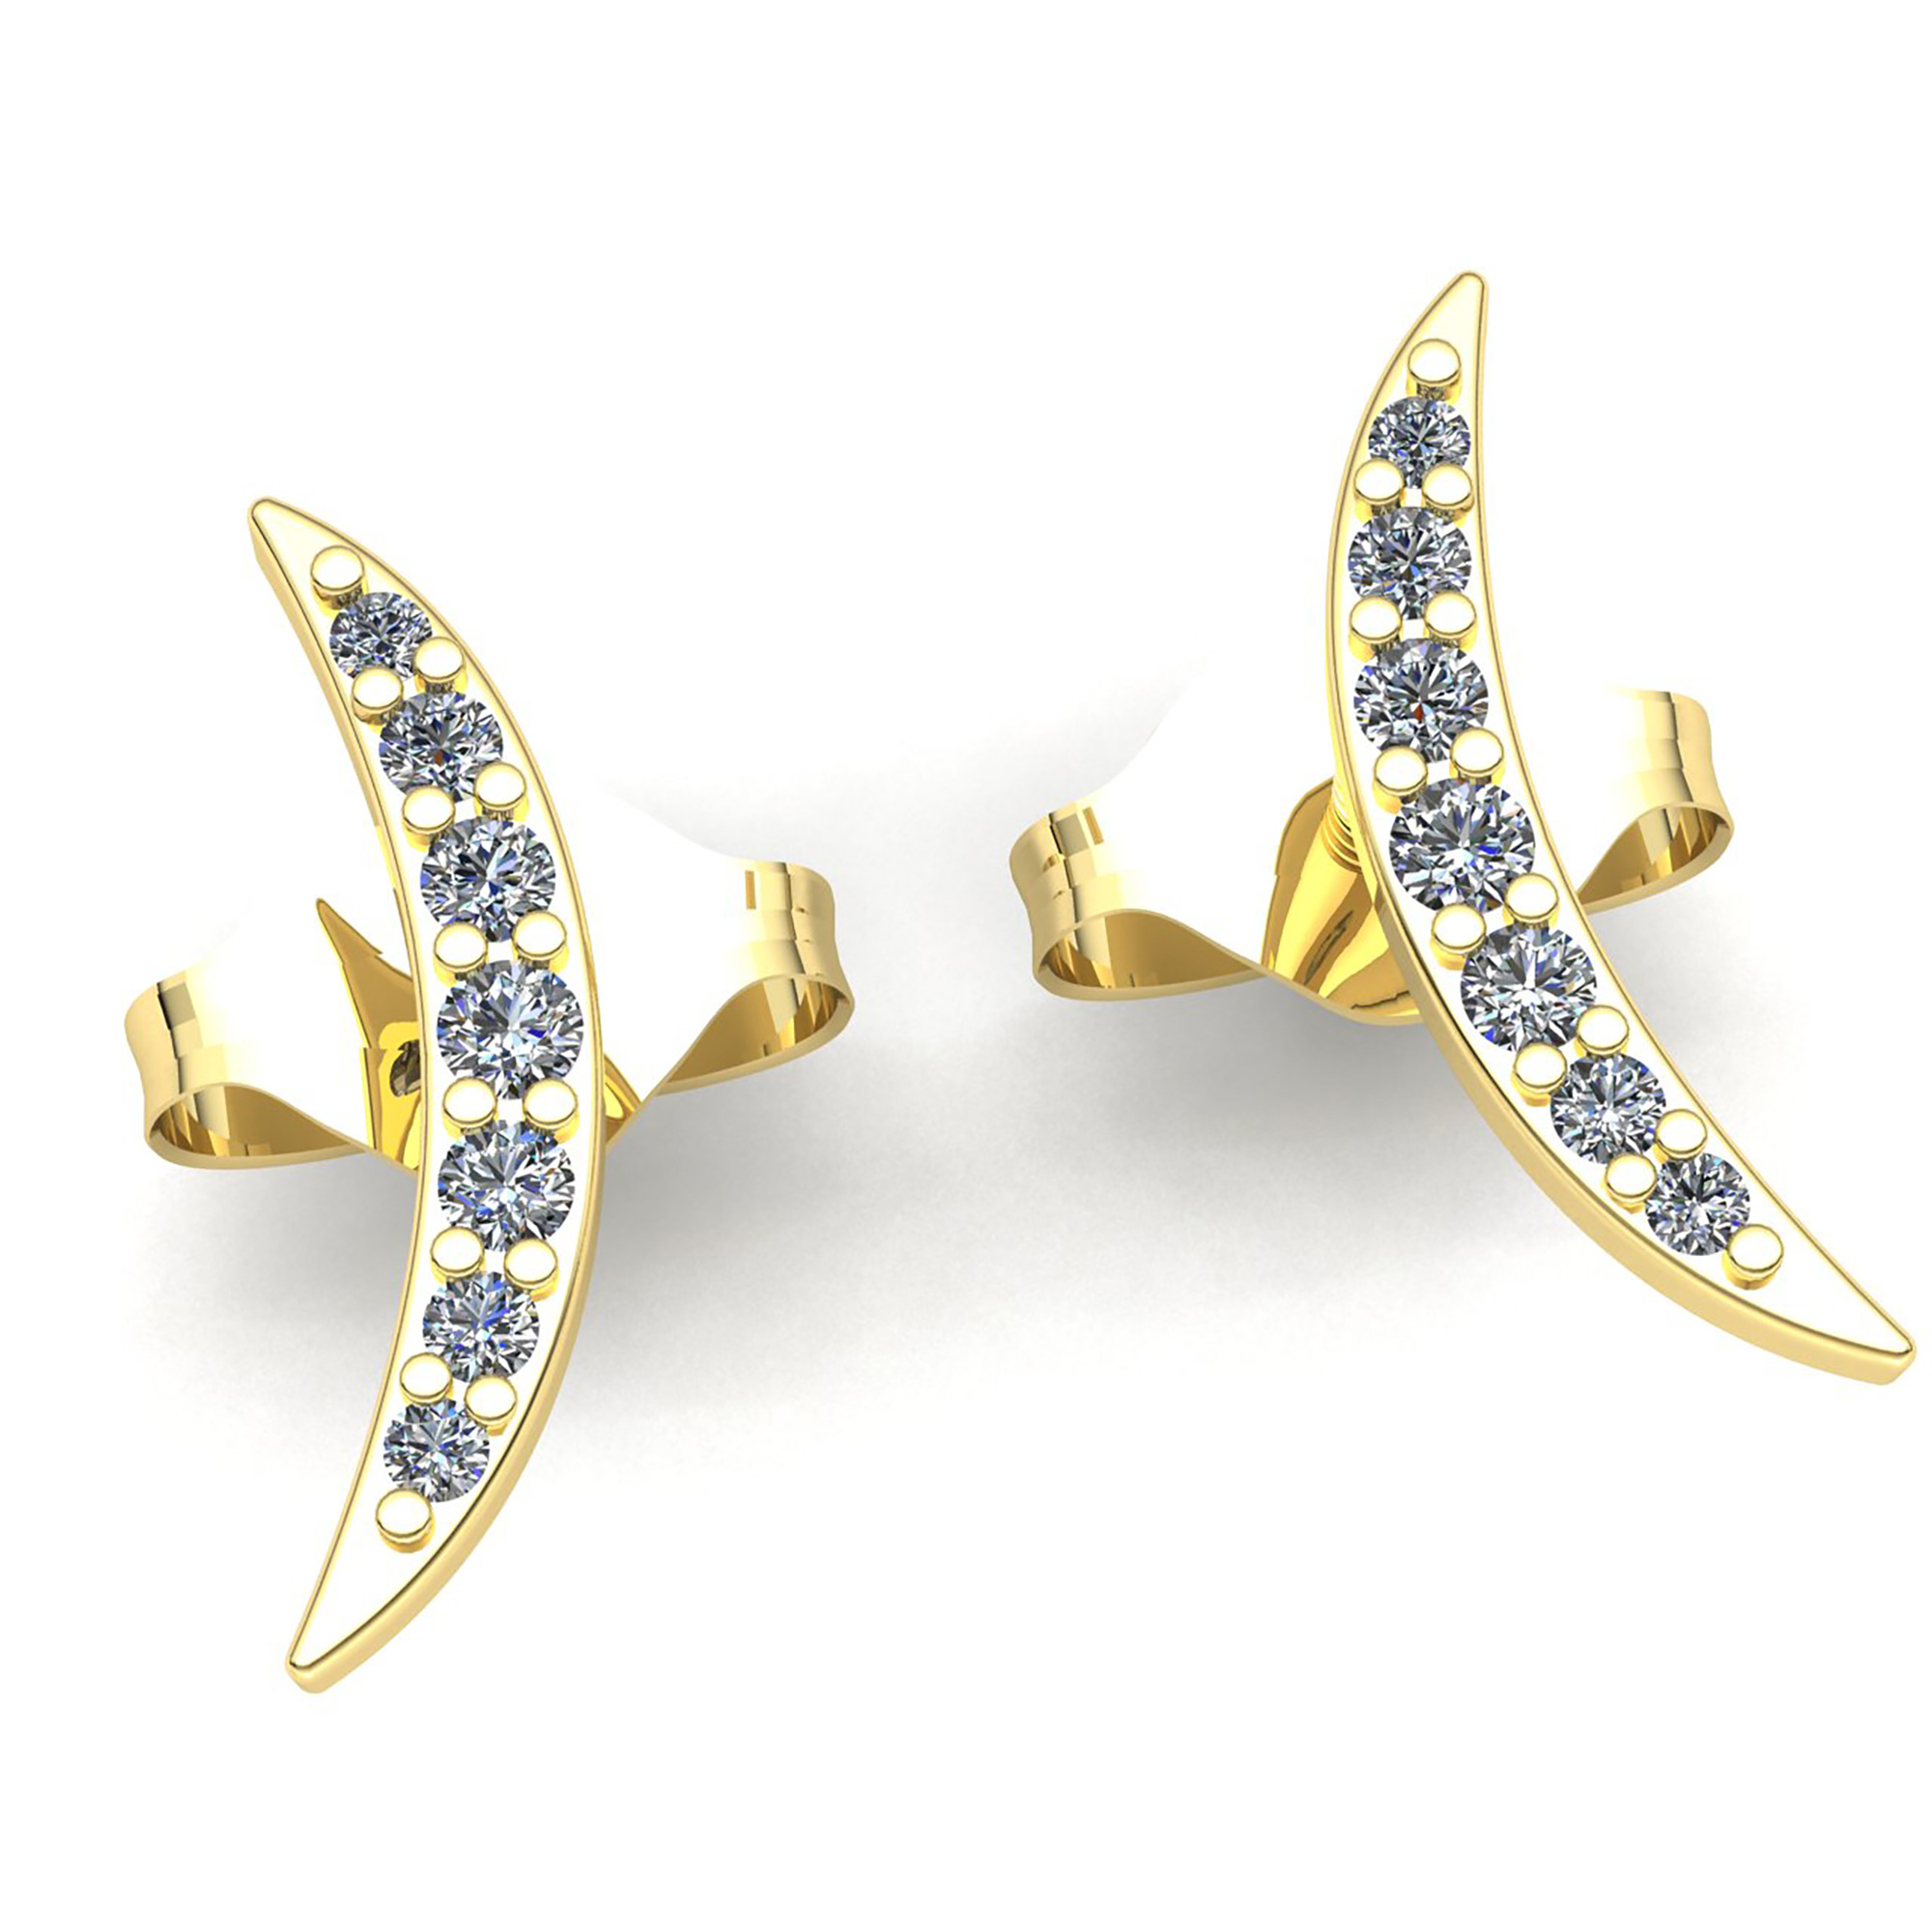 Jewel We Sell 1.5carat Round Cut Diamond Ladies Fancy Earrings 18K White, Yellow or Rose Gold G SI1